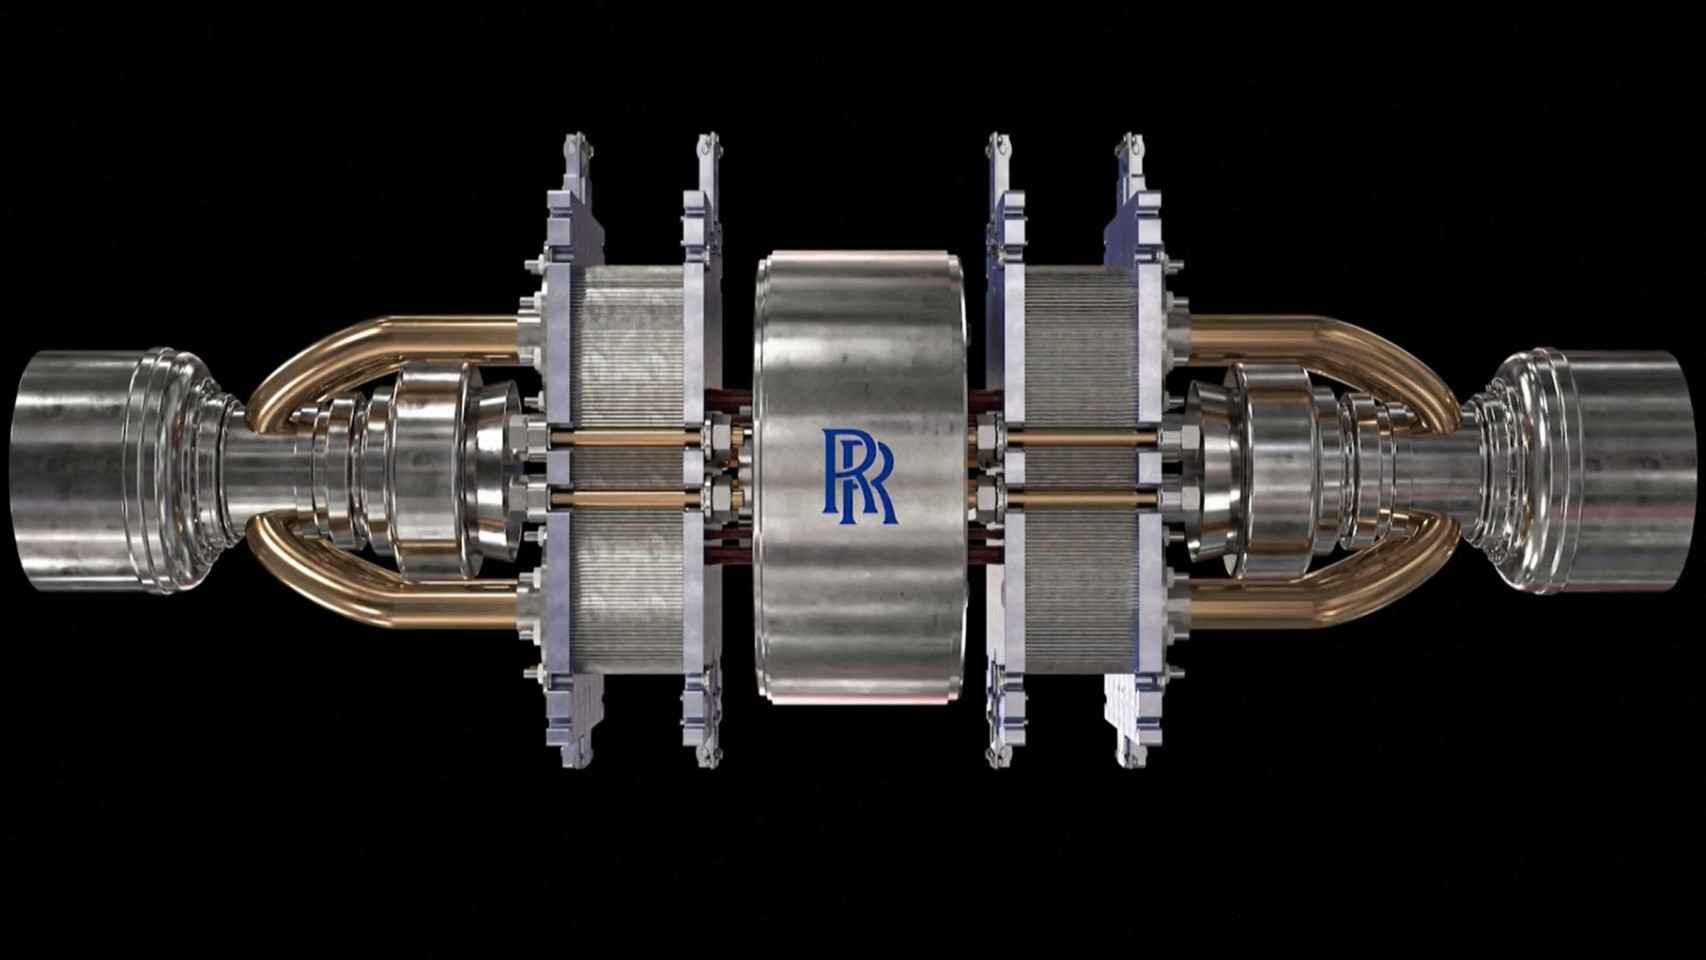 Prototipo de micro reactor nuclear de Rolls-Royce